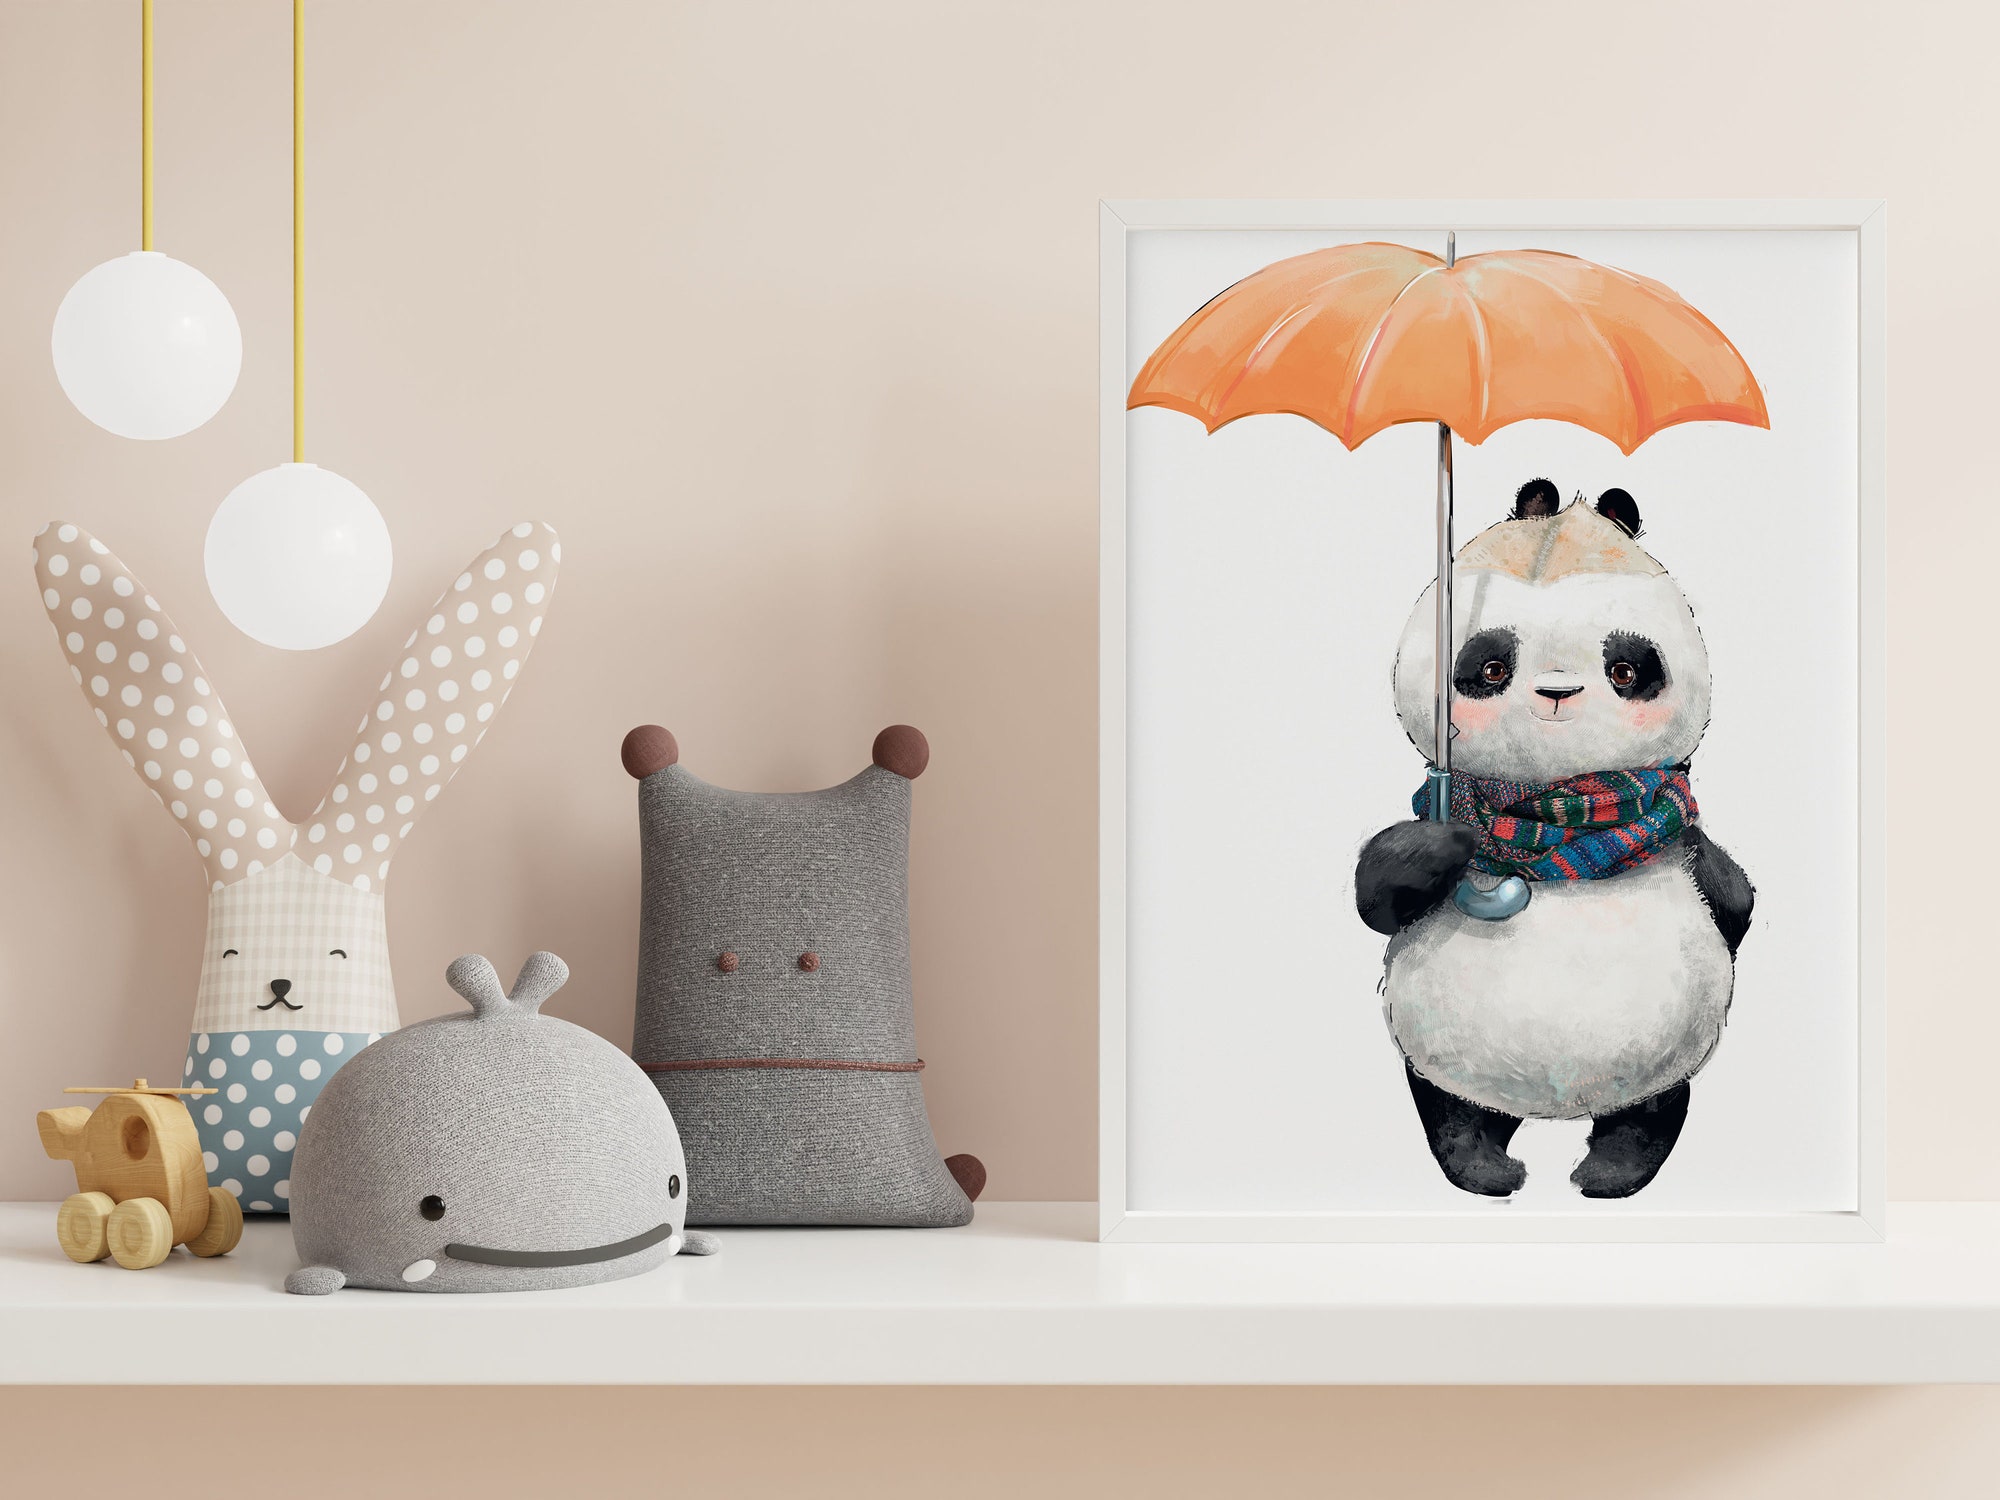 Panda Bear umbrella poster, forest nursery animals poster